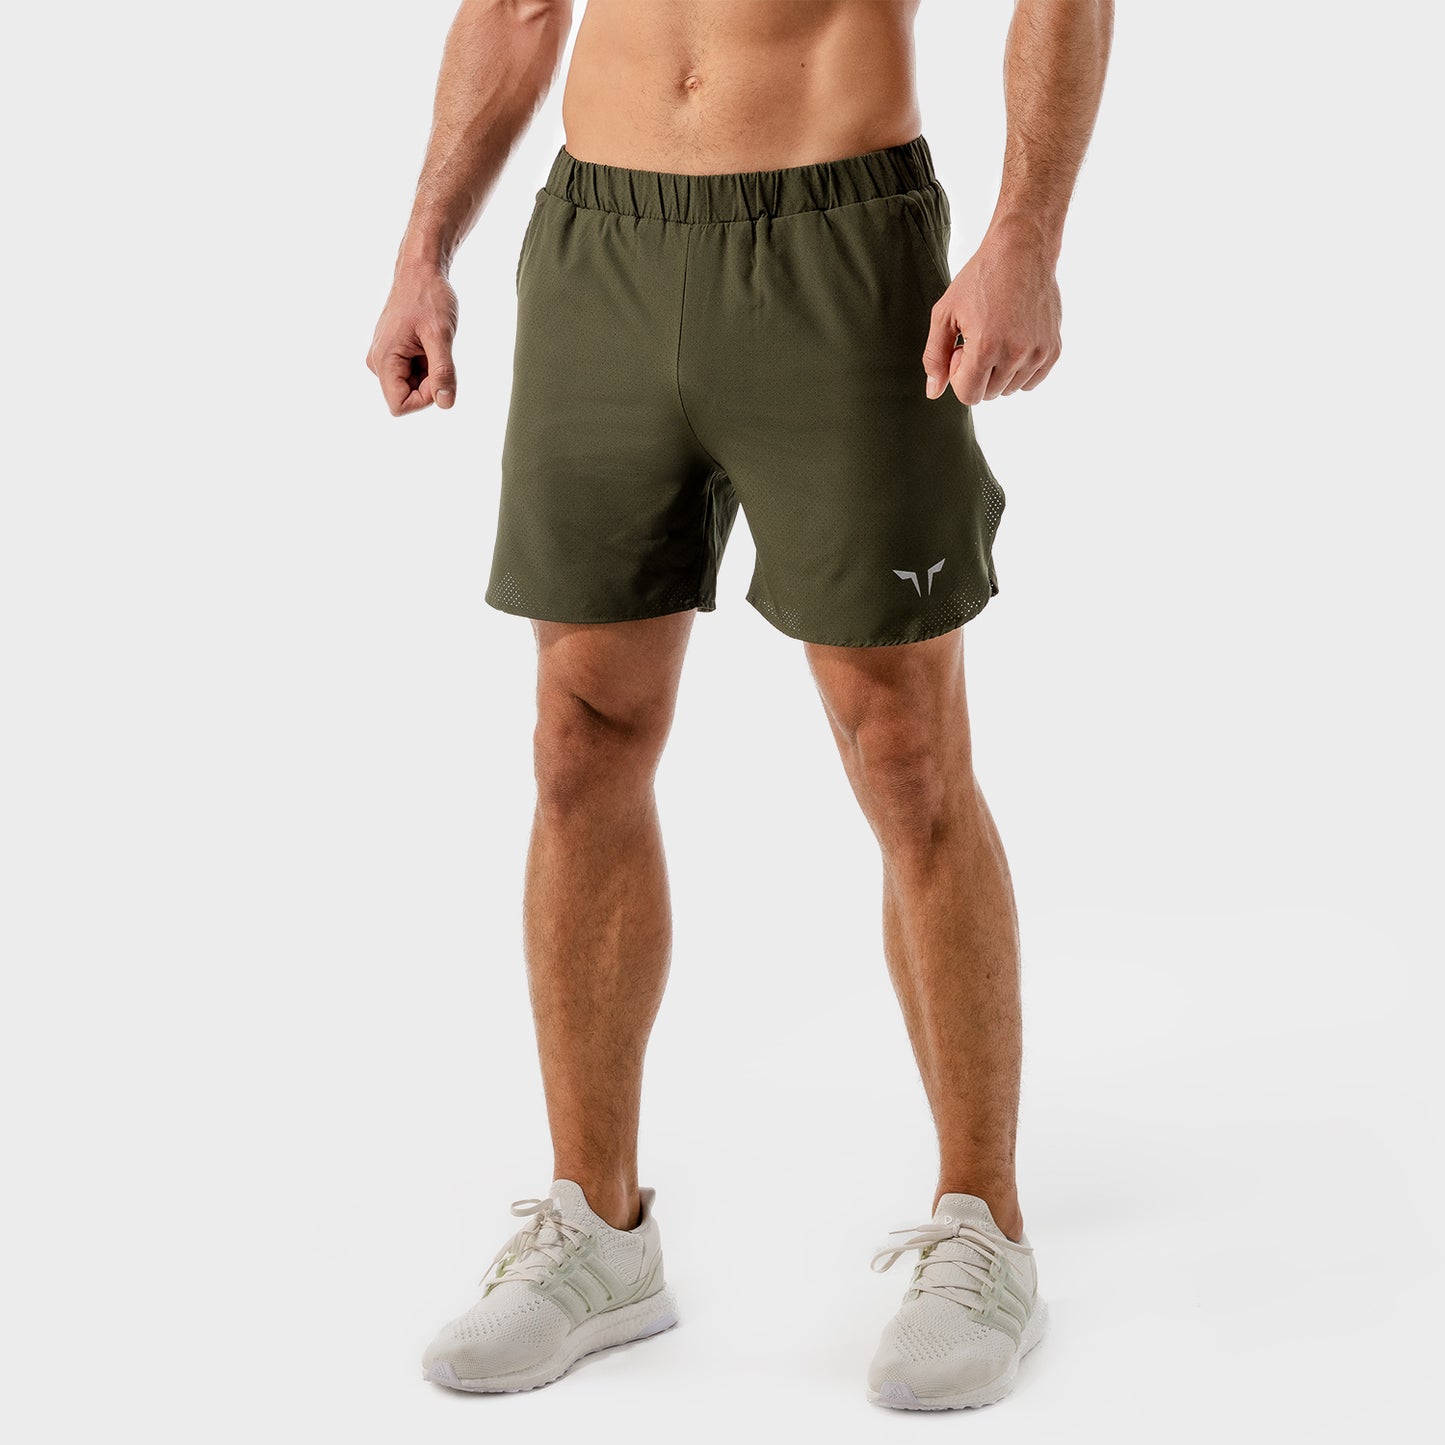 squatwolf-gym-wear-2-in-1-dry-tech-shorts-khaki-workout-shorts-for-men